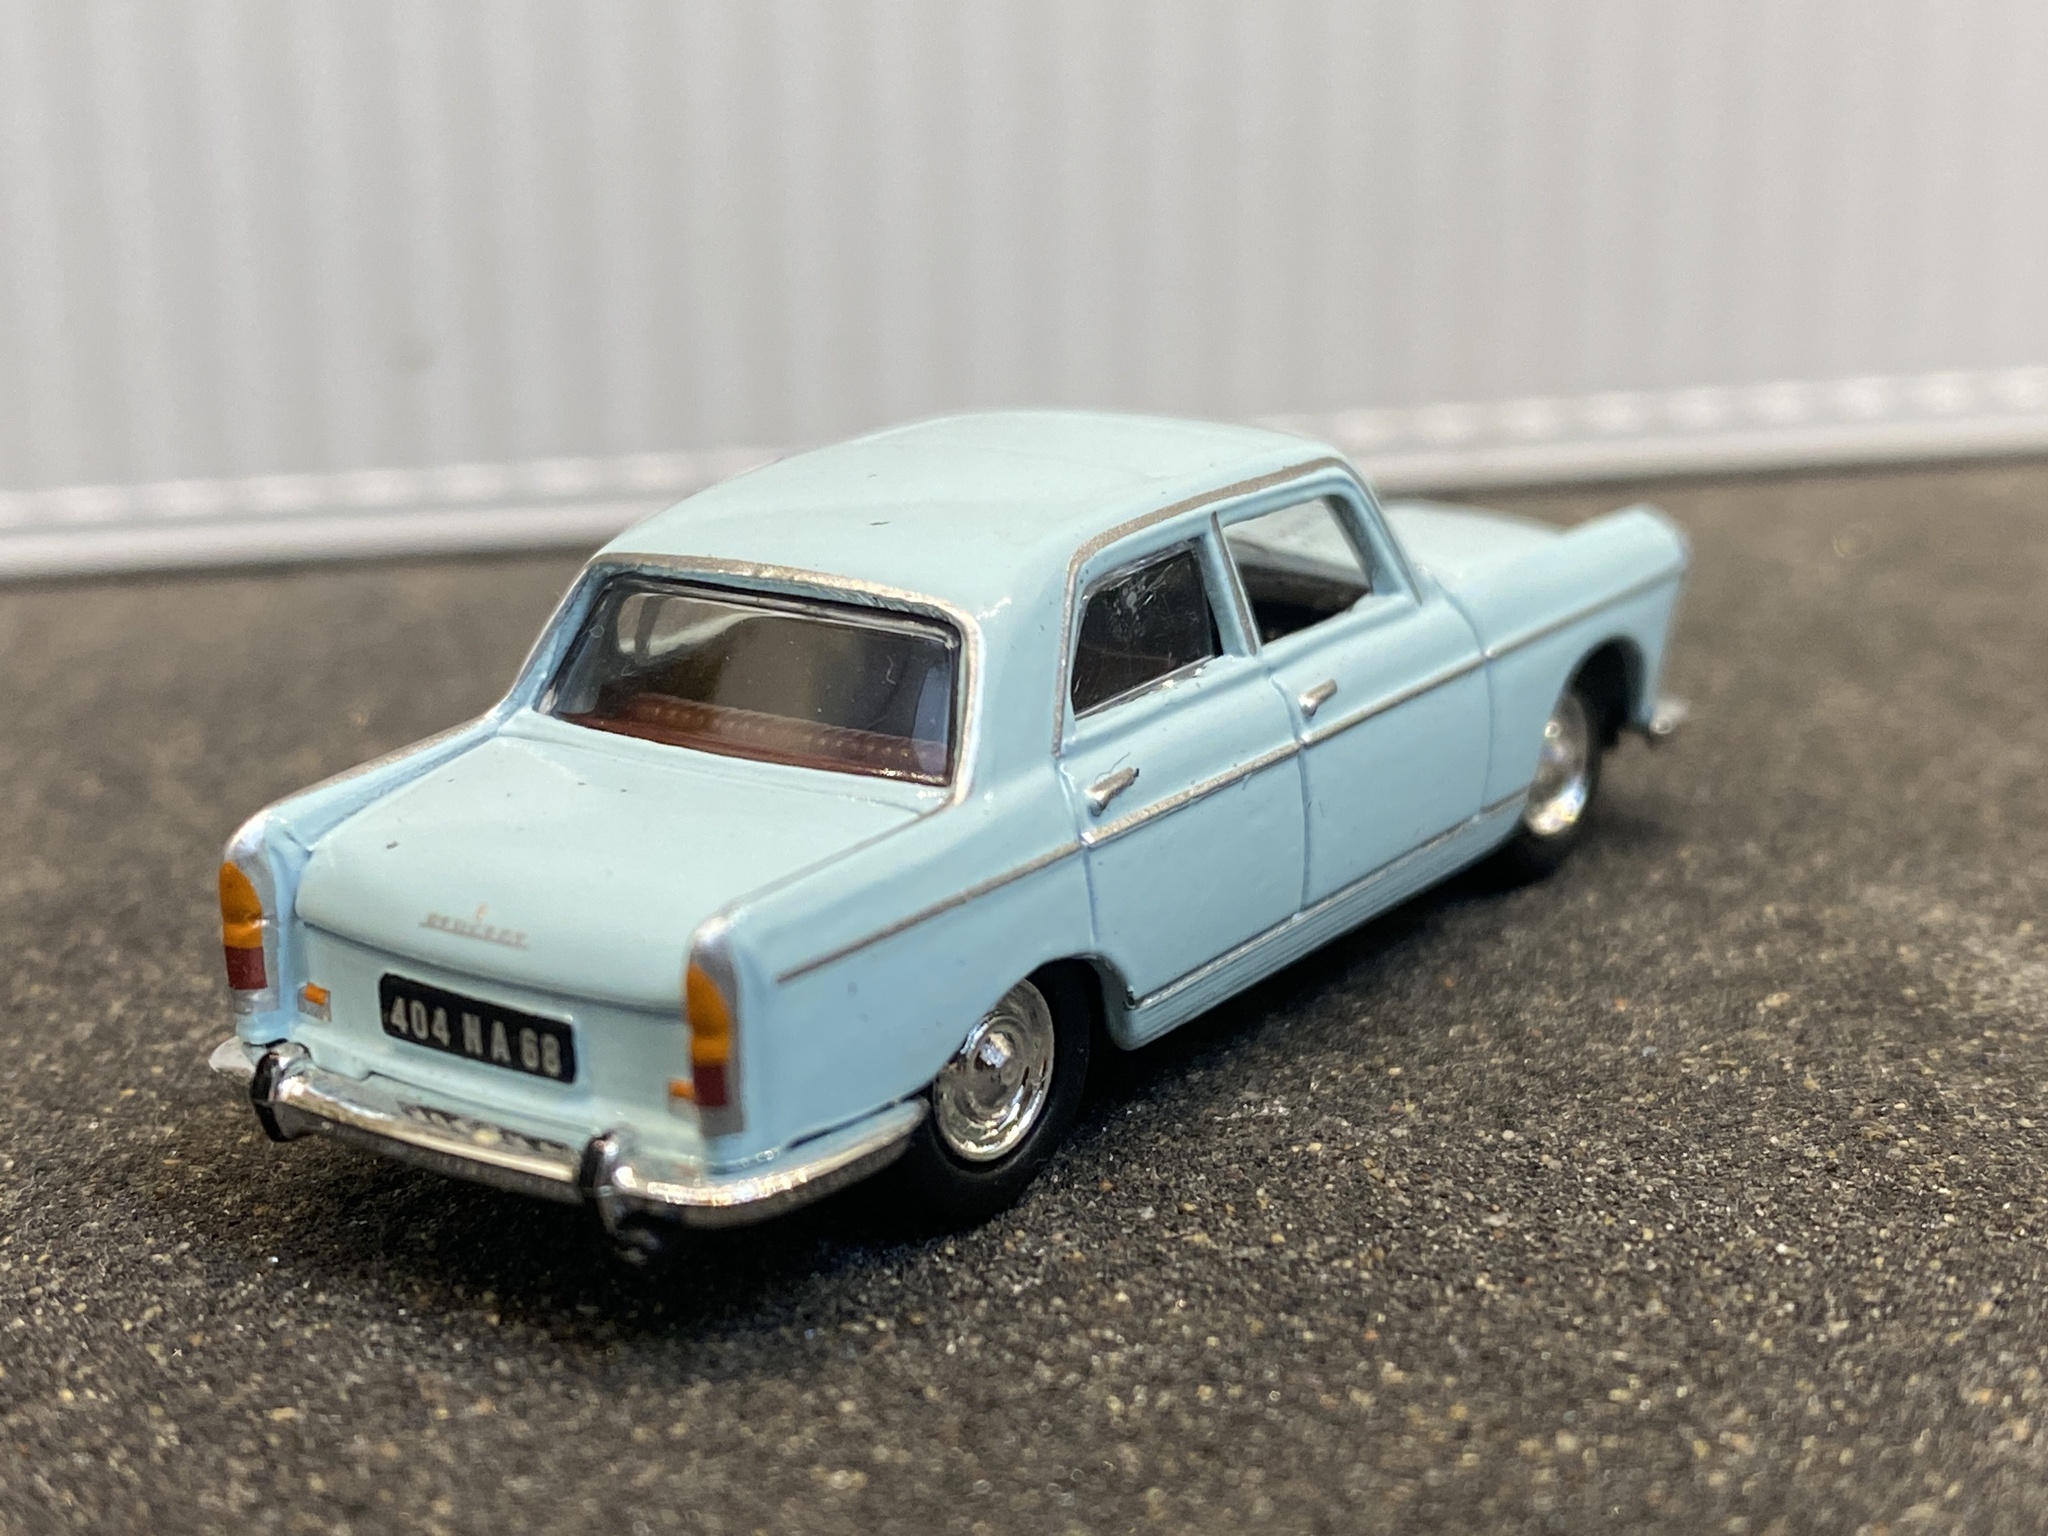 Skala 1/87 H0, Peugeot 404 1968, Ljusblå från Norev